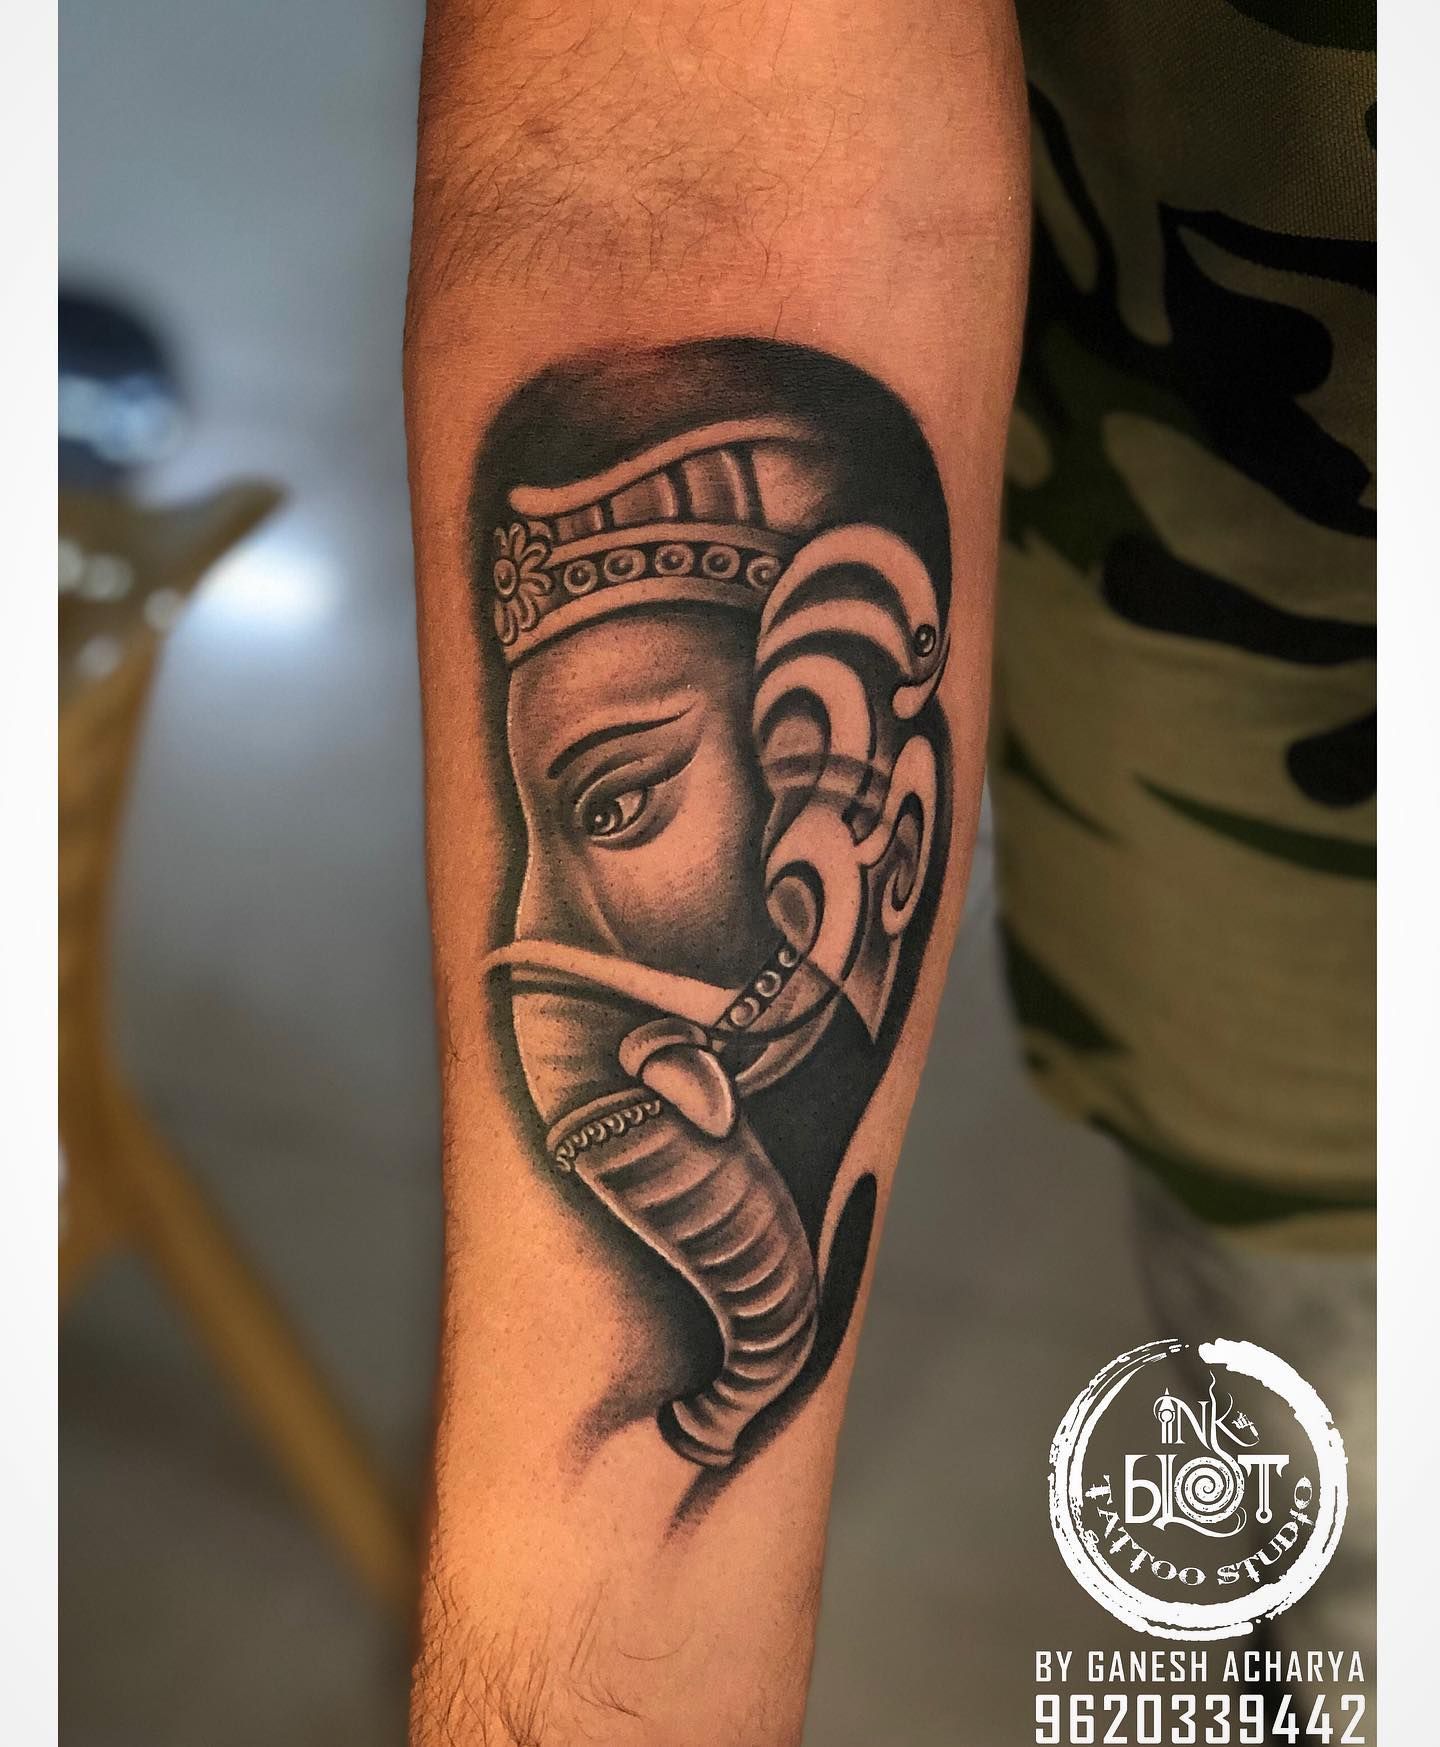 Ganesh tattoo in Nepal | Sumina Shrestha | Suminu Tattoo in Nepal - Tattoo  artist in Nepal